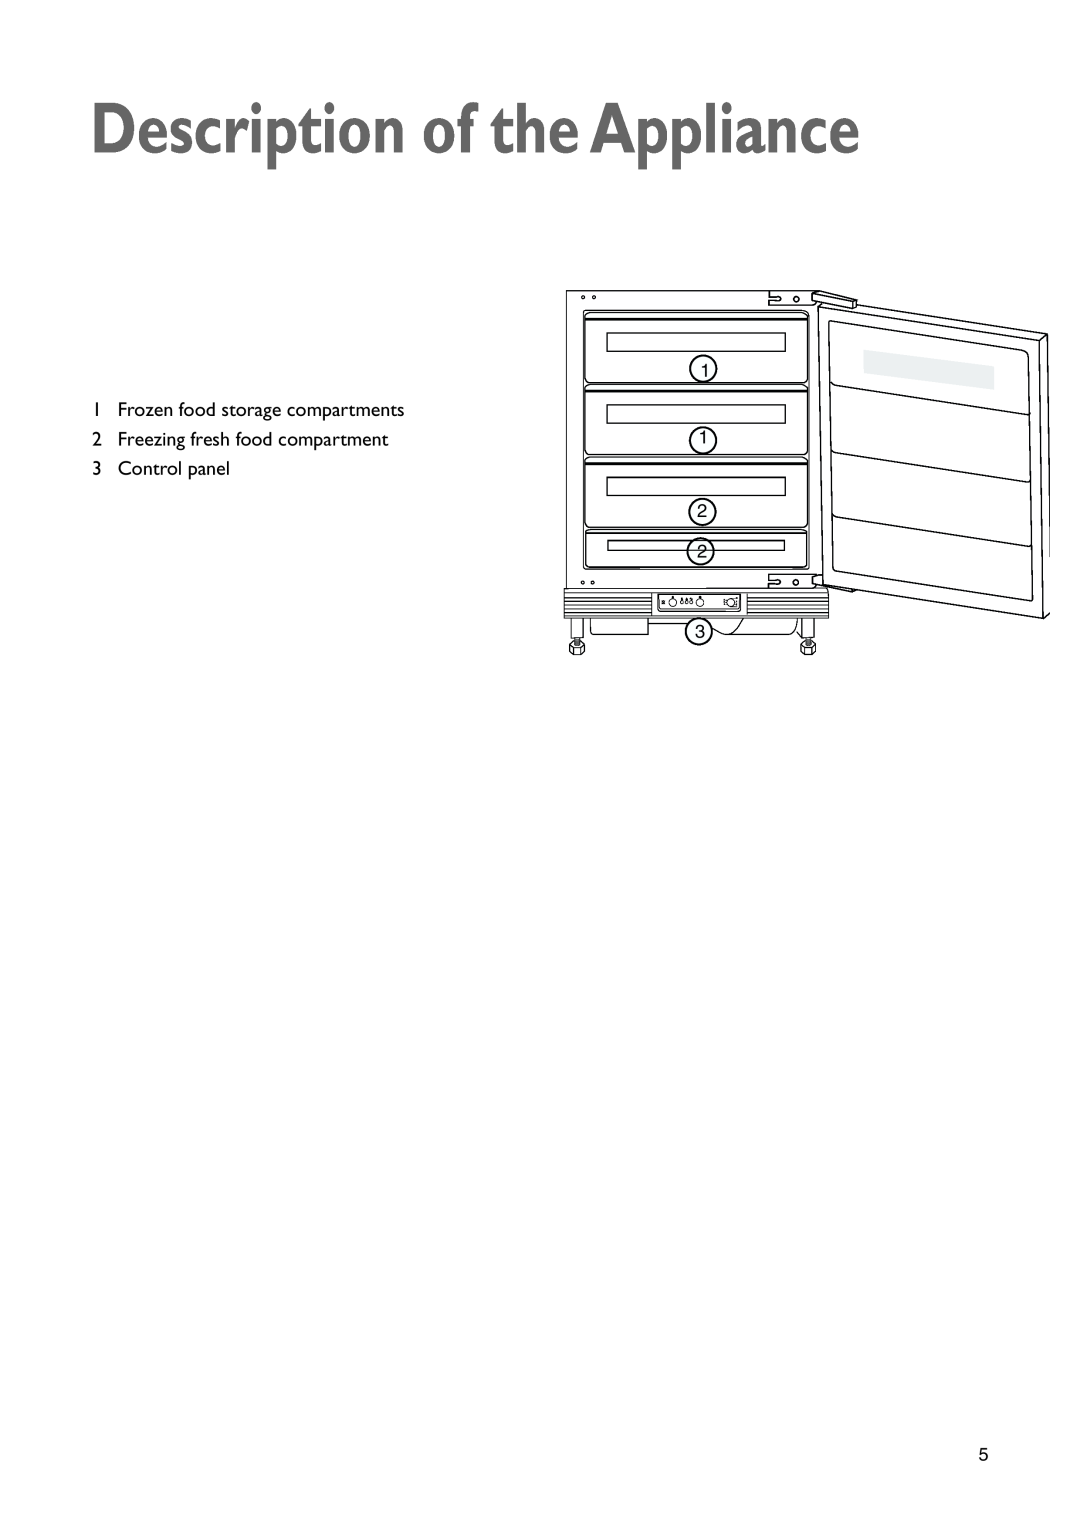 John Lewis JLBIUCF 01 Description of the Appliance, Frozen food storage compartments, Freezing fresh food compartment 